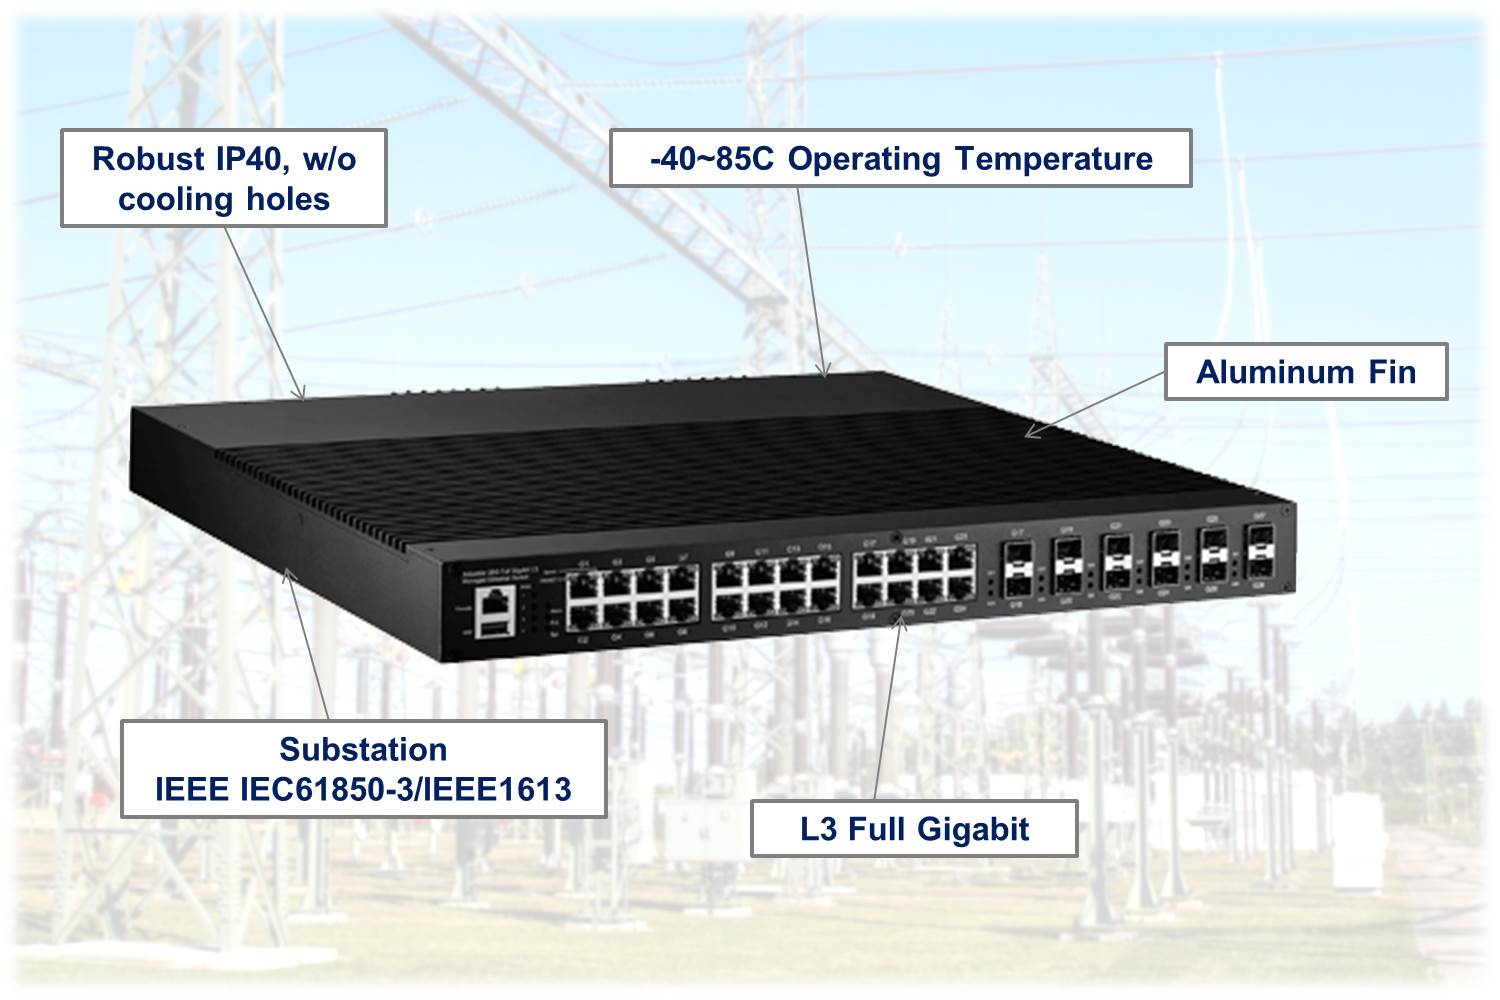 Korenix Launches JetNet 6828Gf for Substation Applications